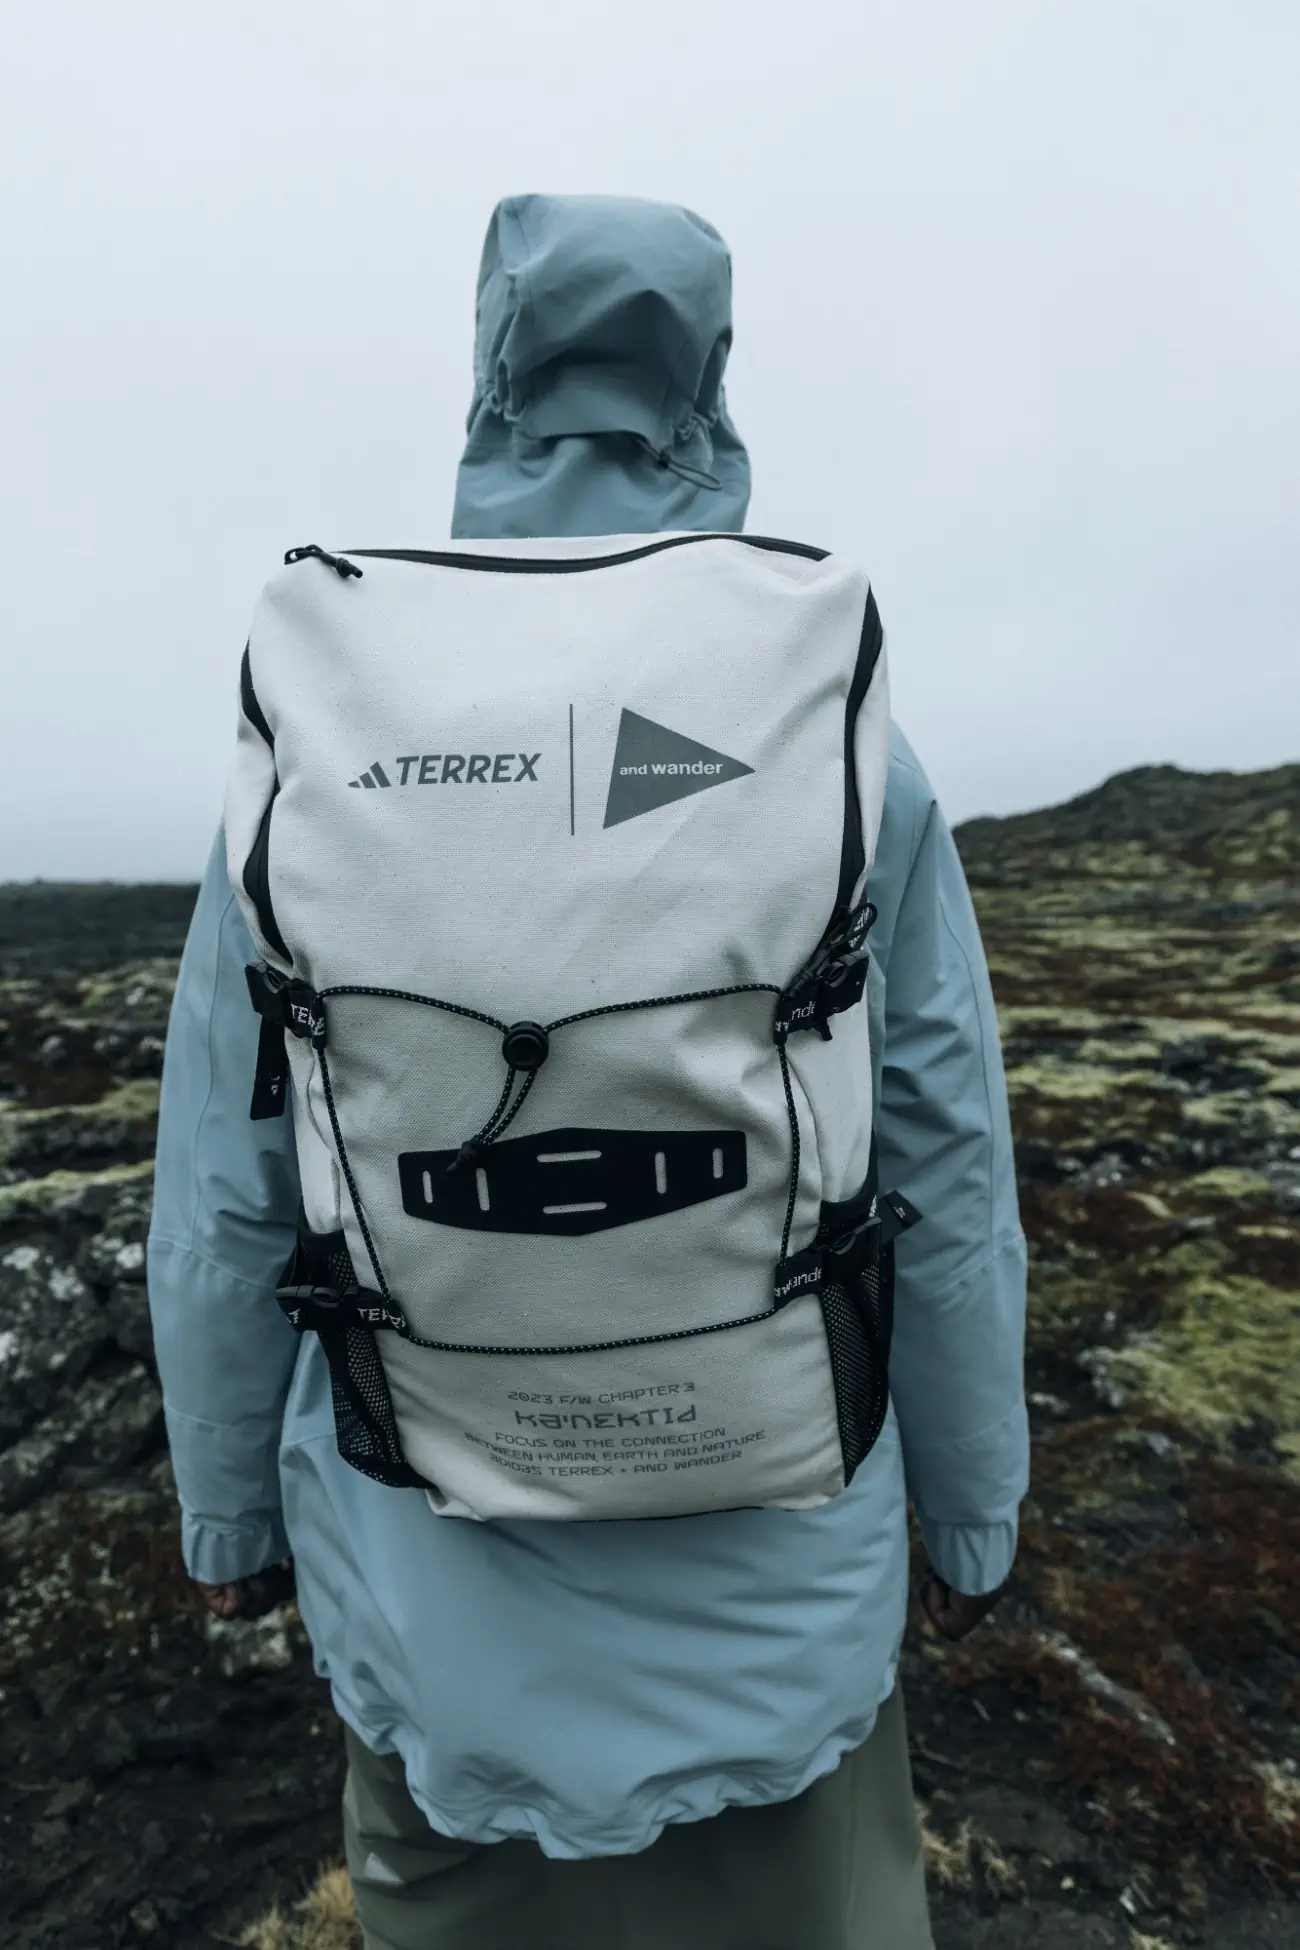 adidas TERREX x And Wander unveil final drop of their multi-seasonal collaboration